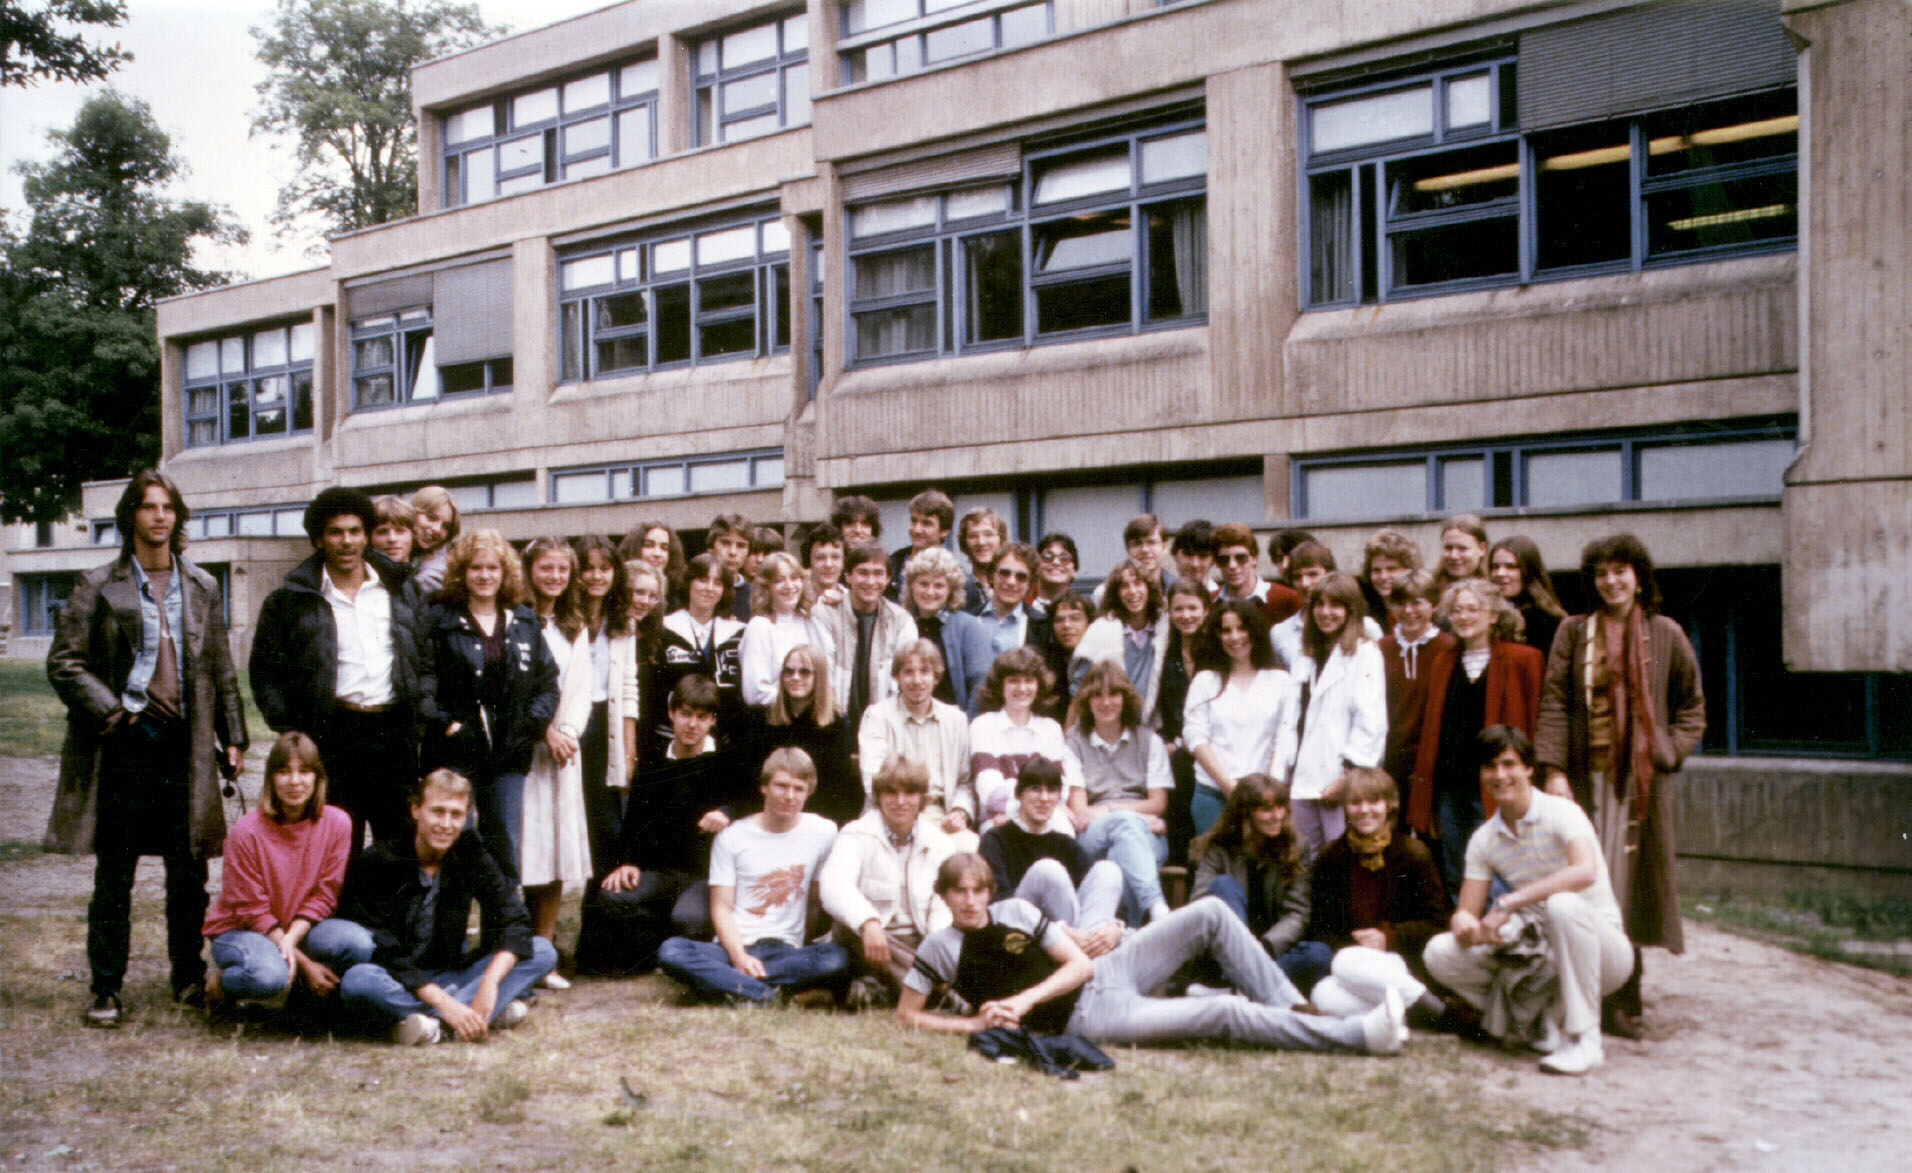 JFKS Class of '82